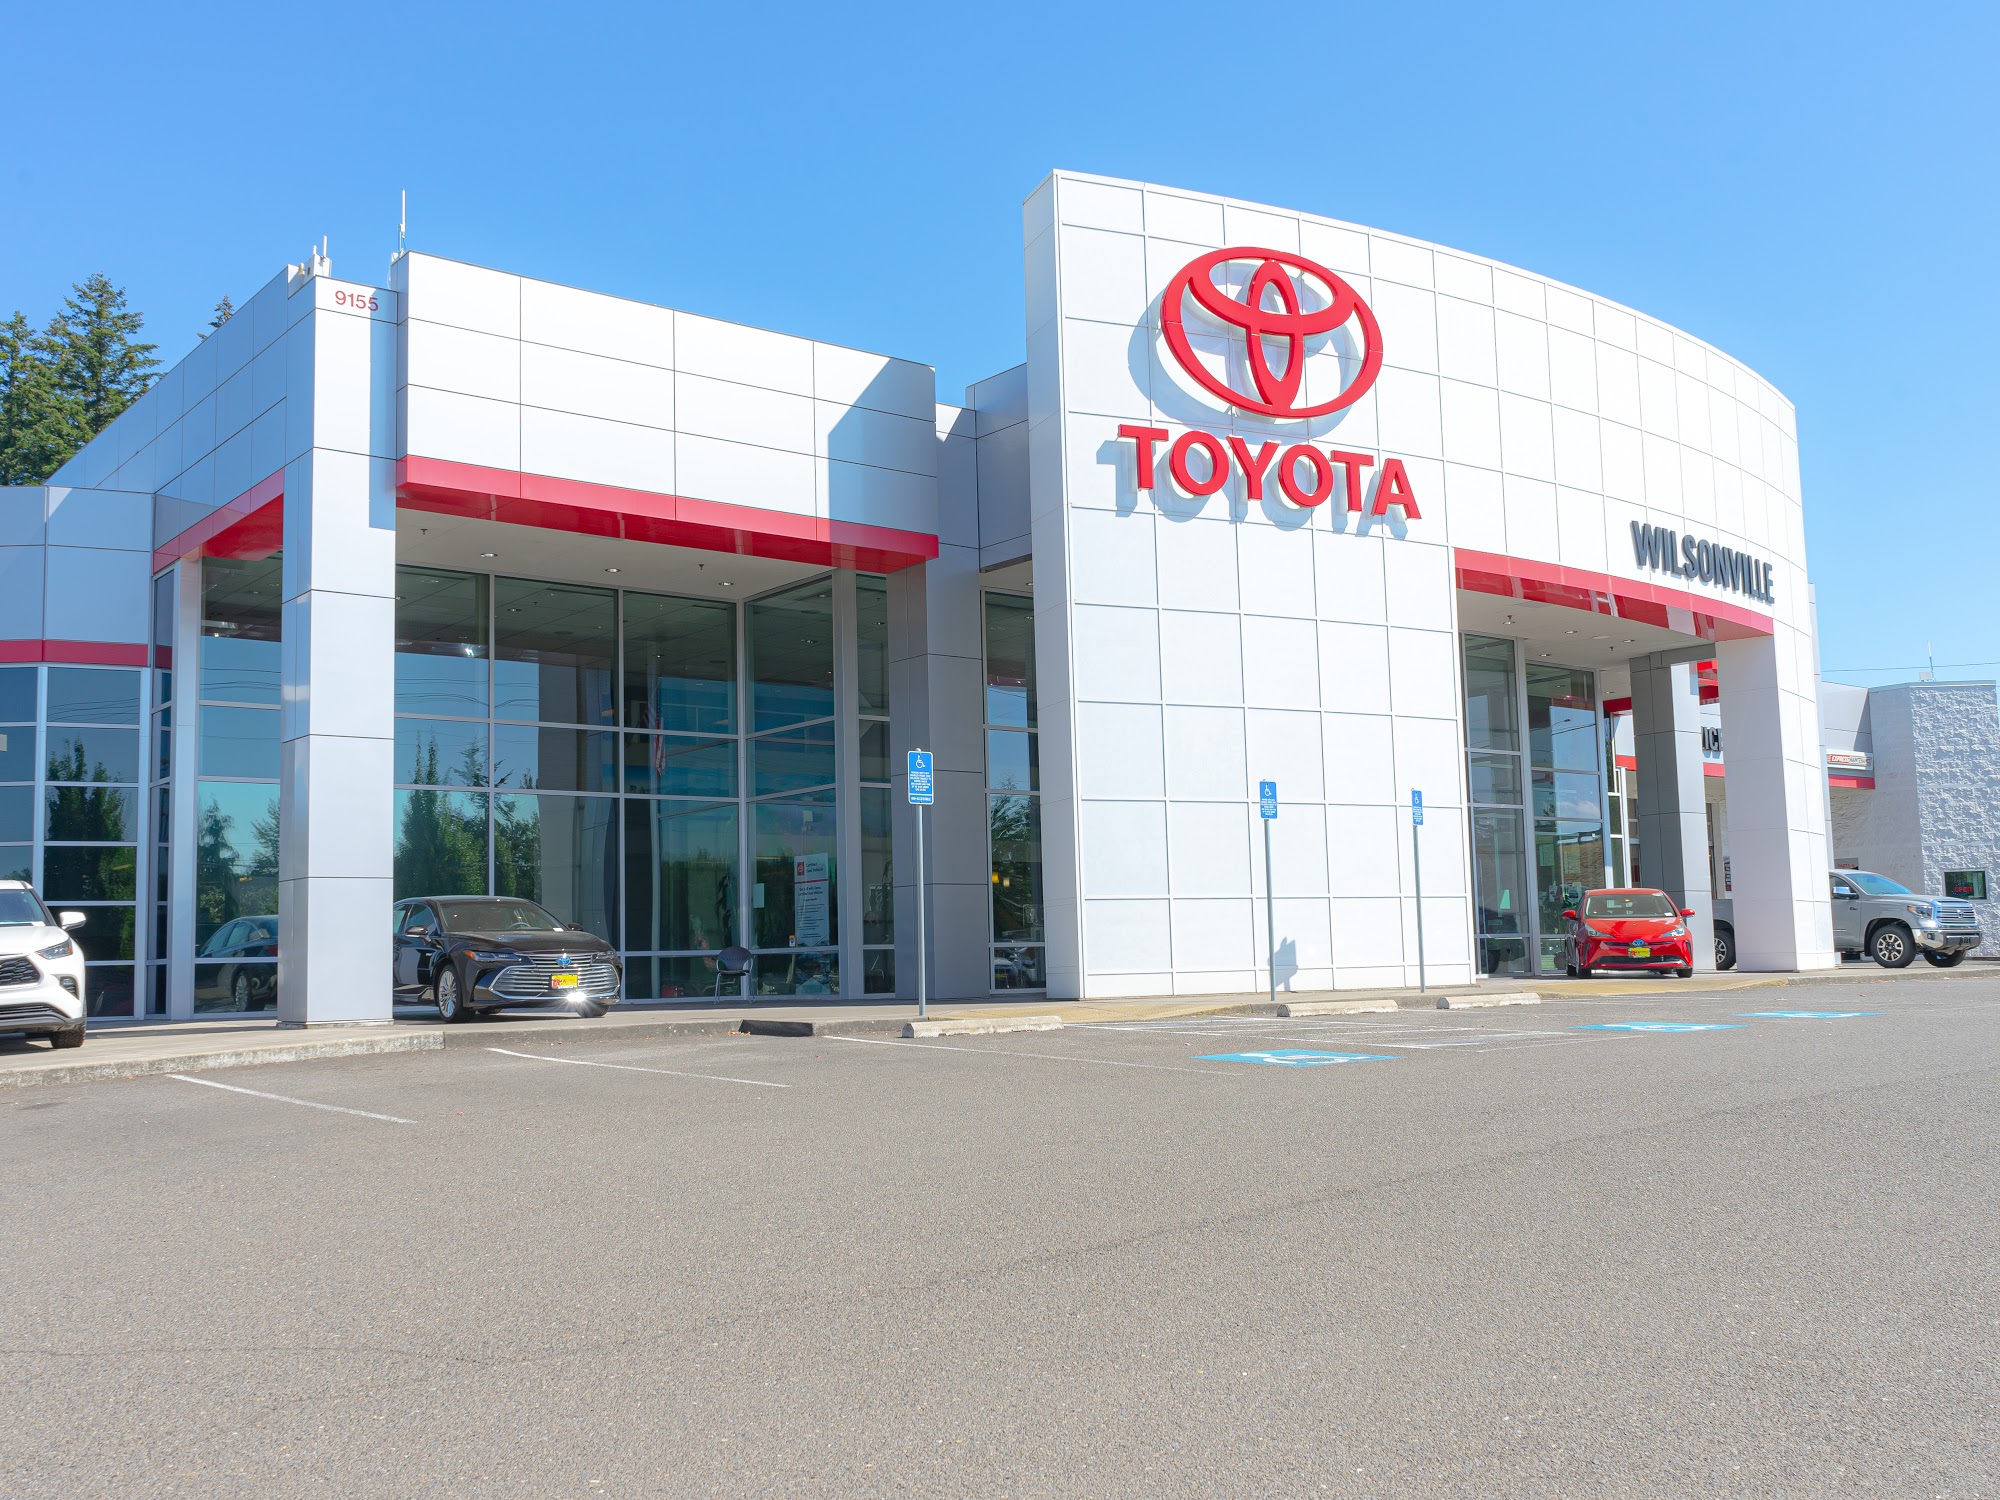 Toyota Parts: Wilsonville Toyota